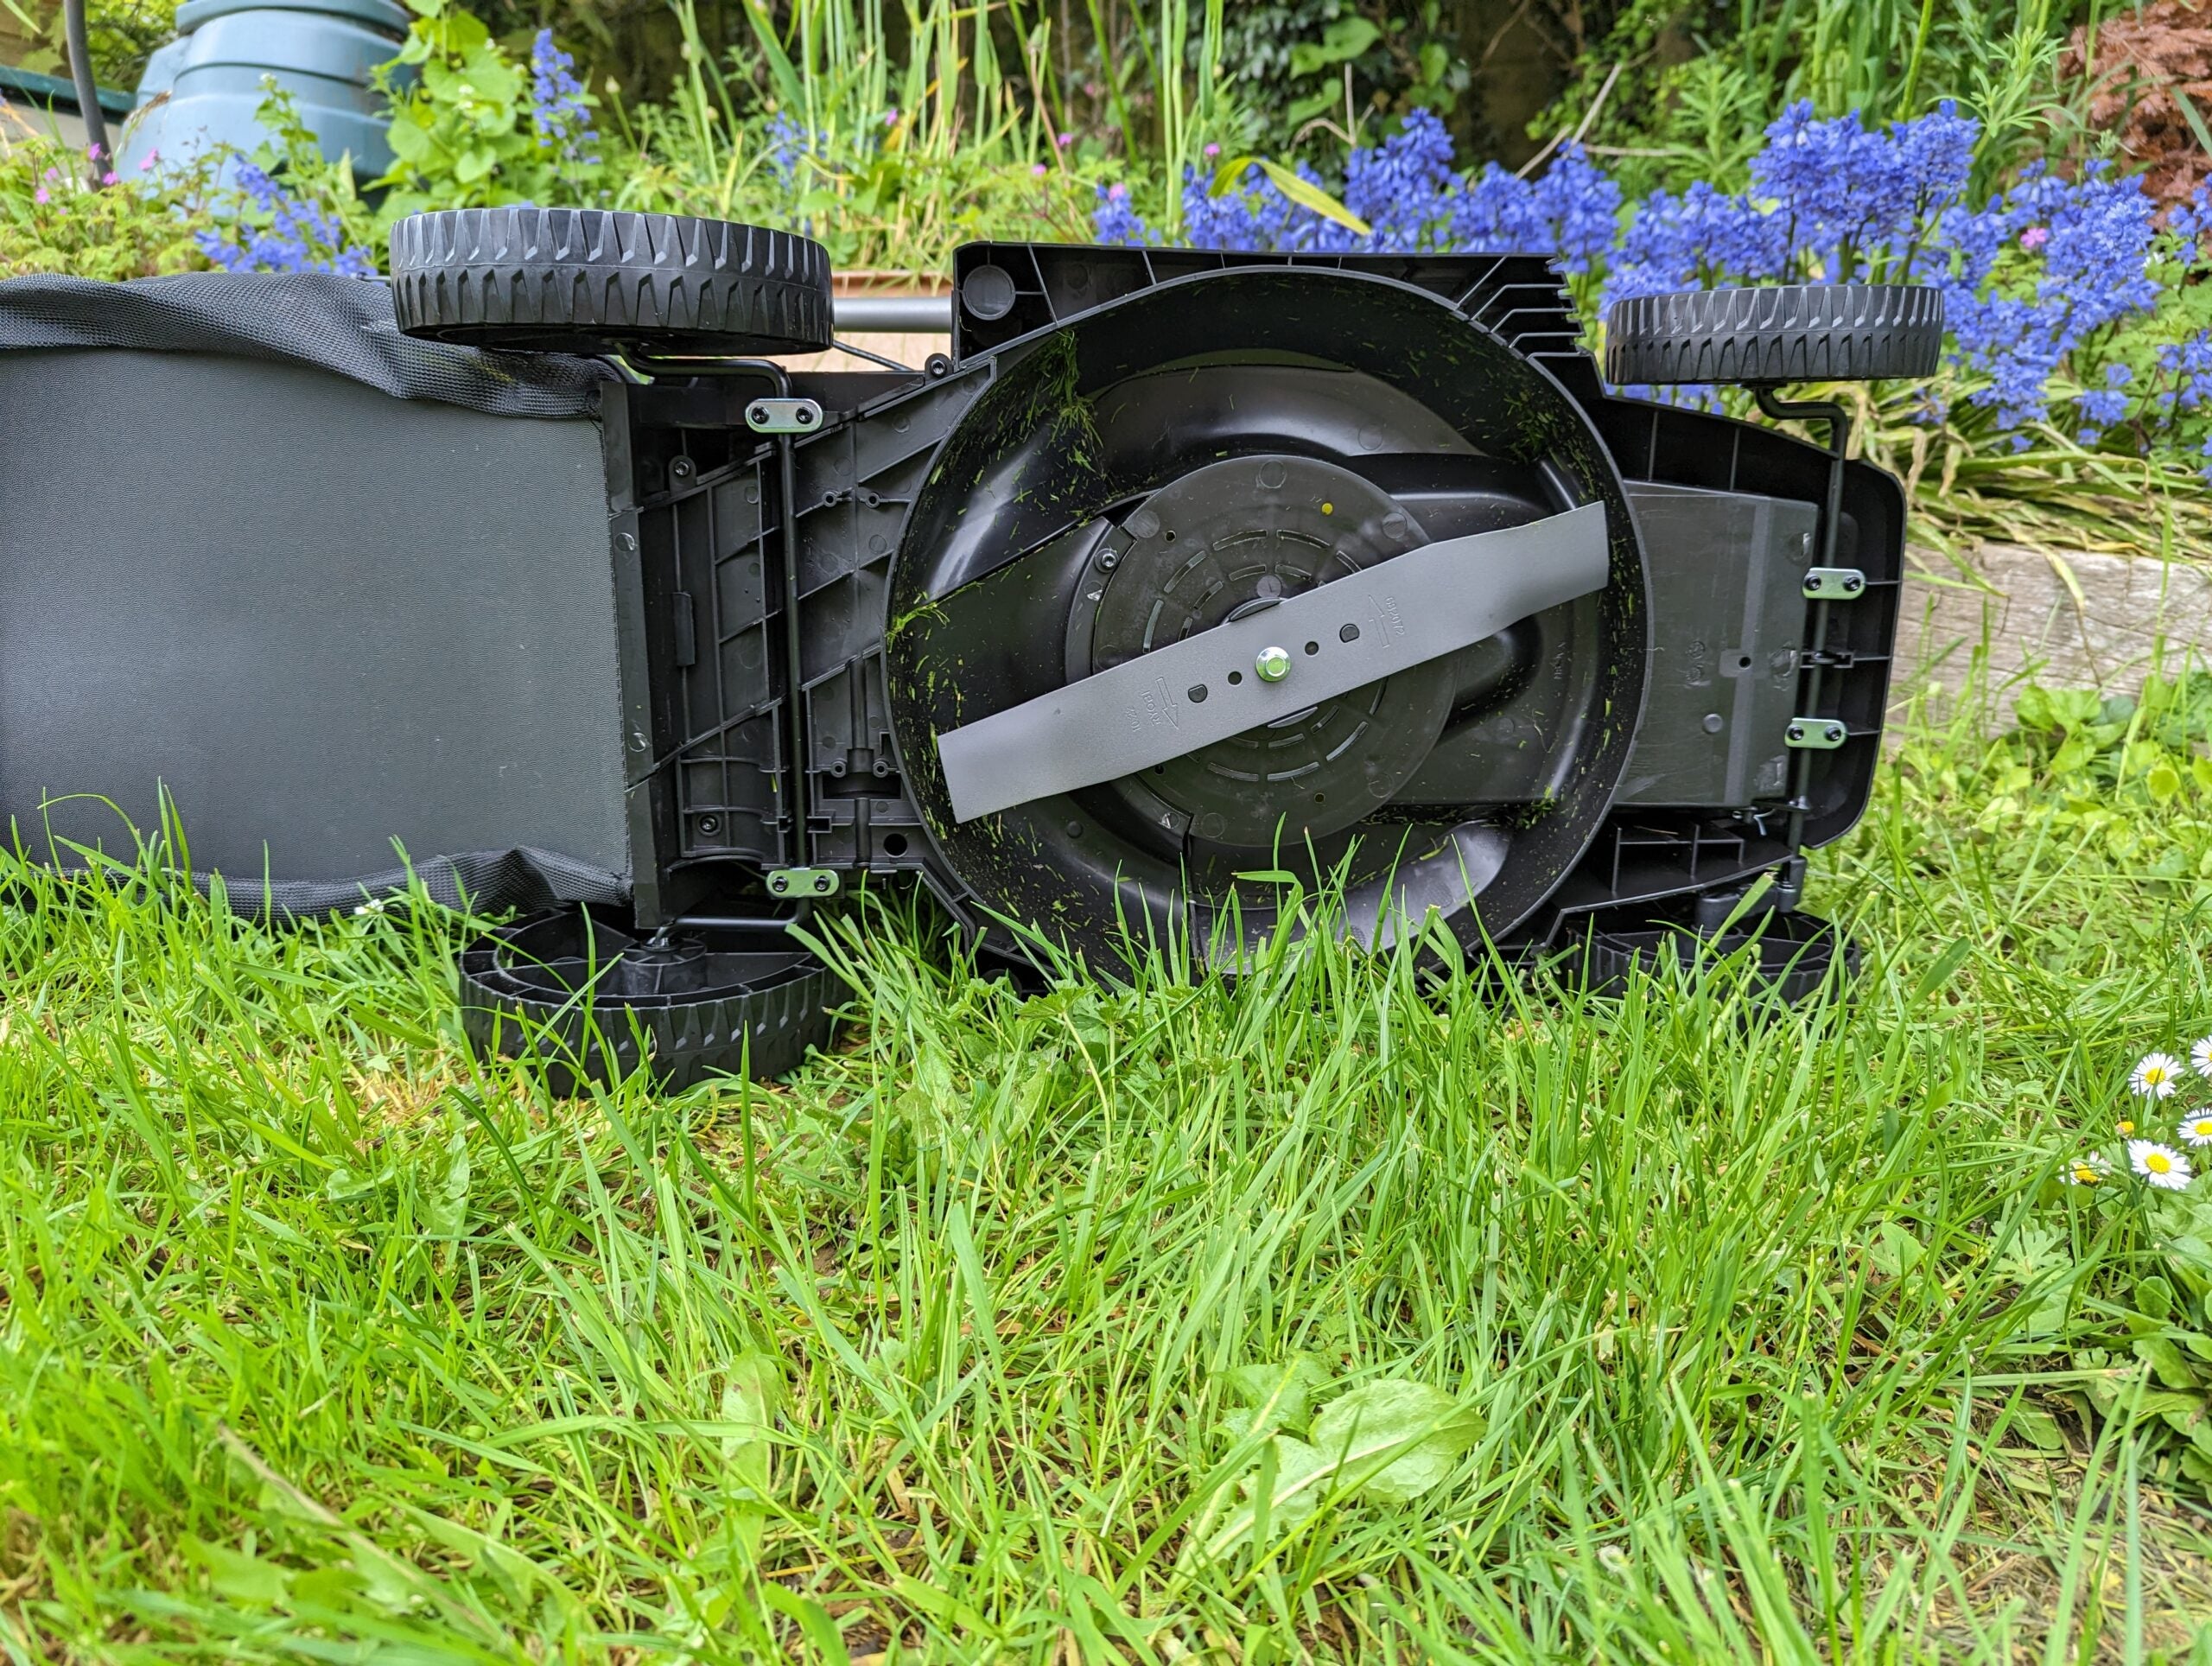 Ryobi One+ Cordless 33cm Lawnmower Review: Good cutting, short battery